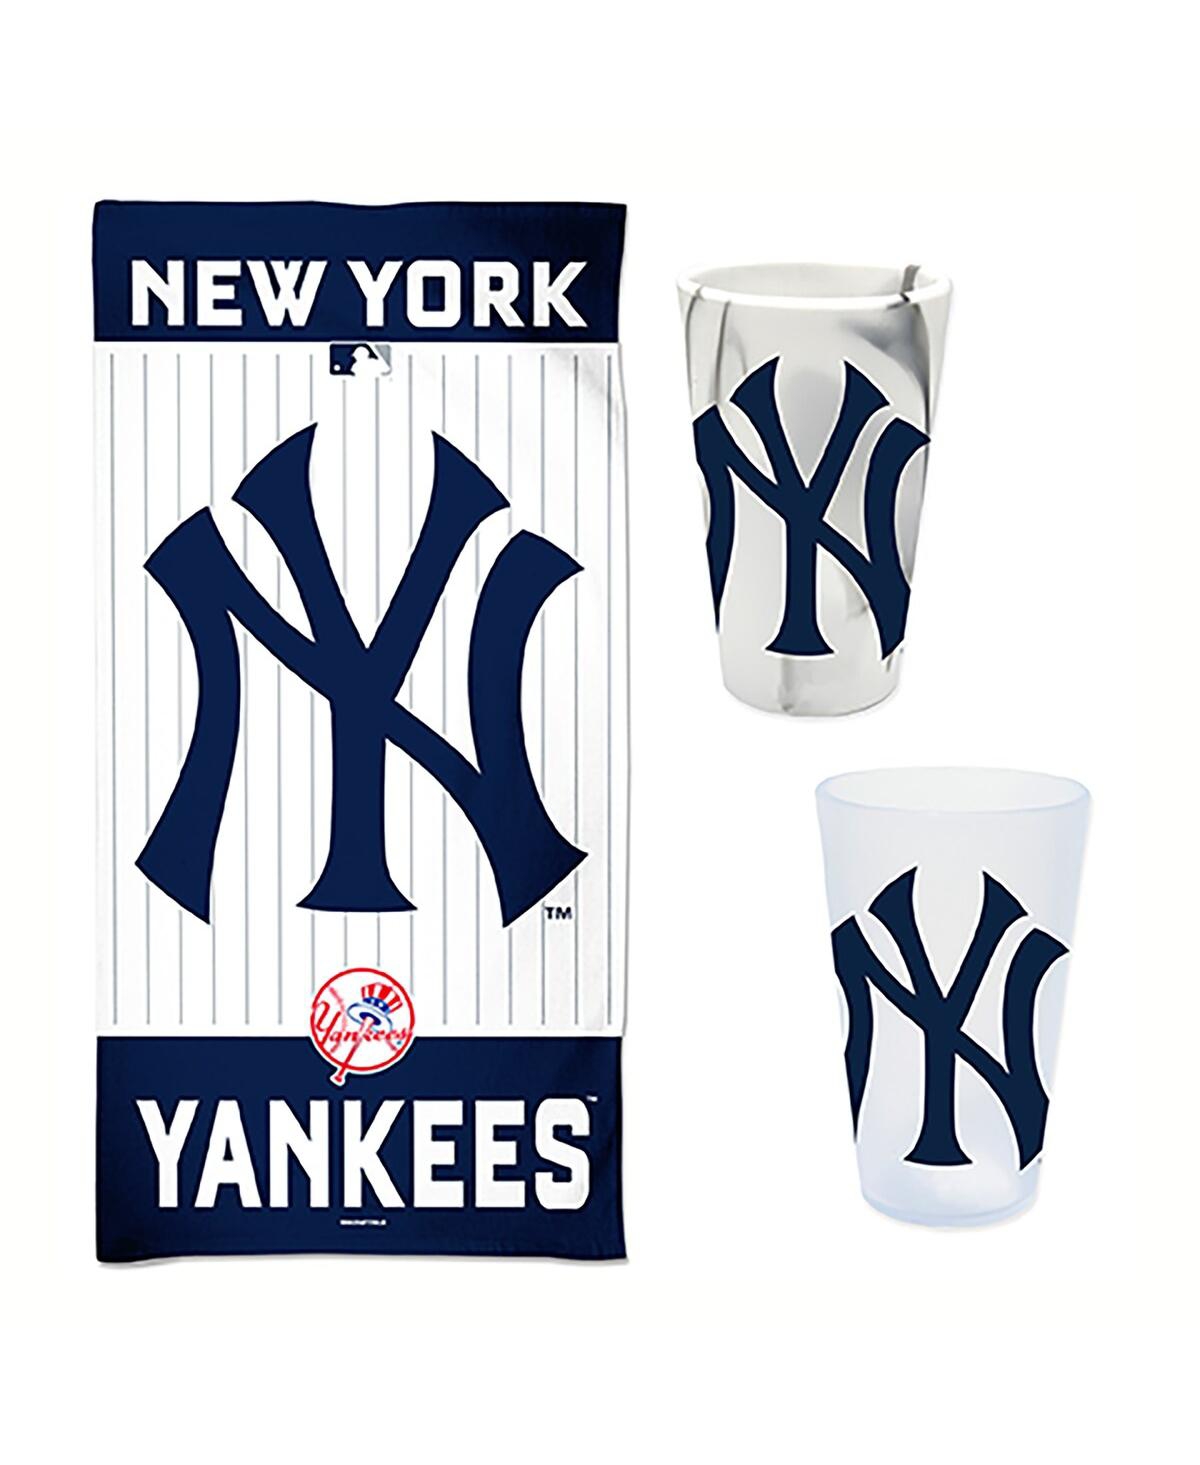 New York Yankees Beach Day Accessories Pack - Multi